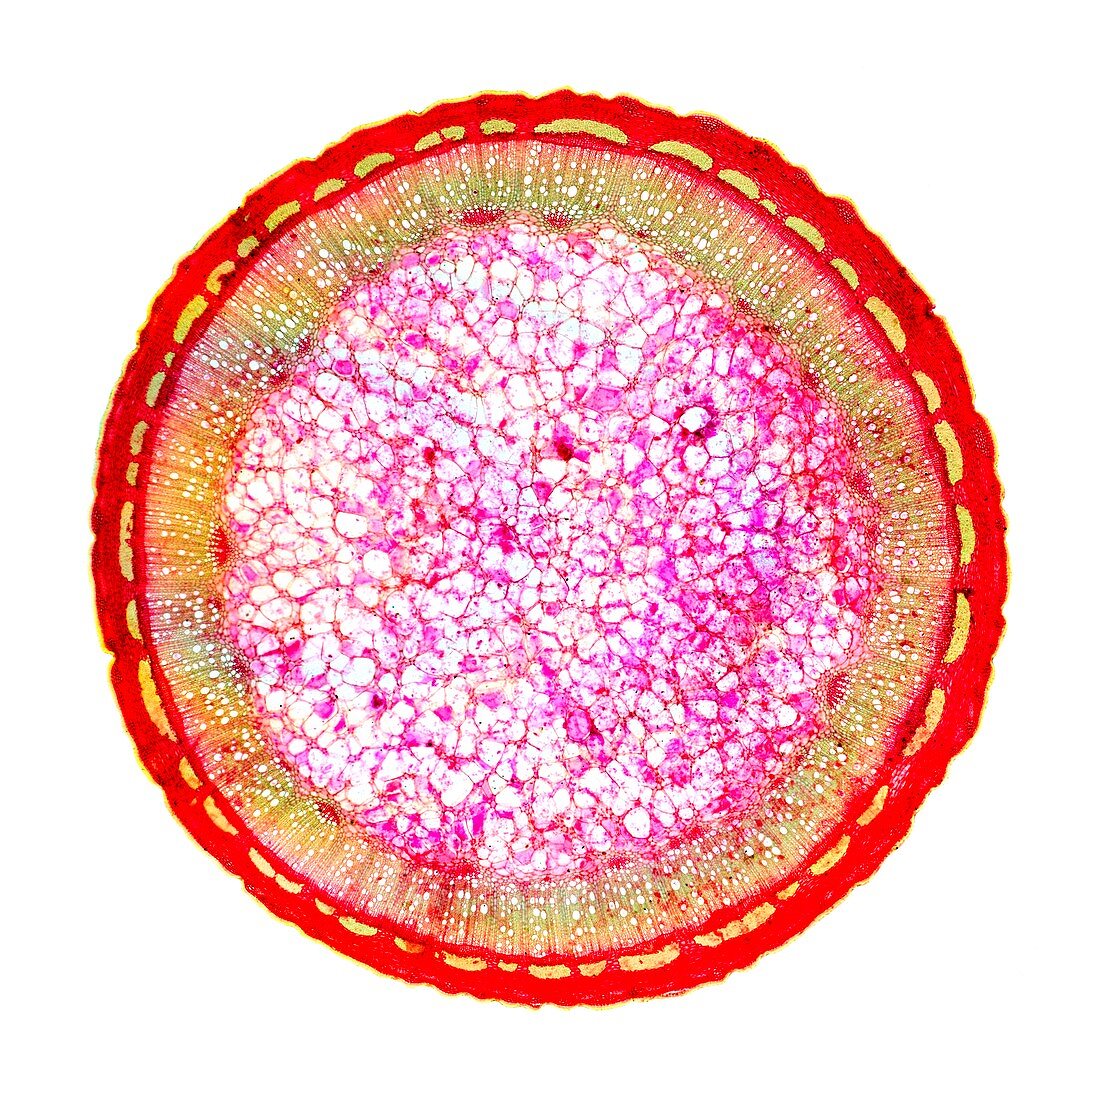 Dog rose stem,light micrograph